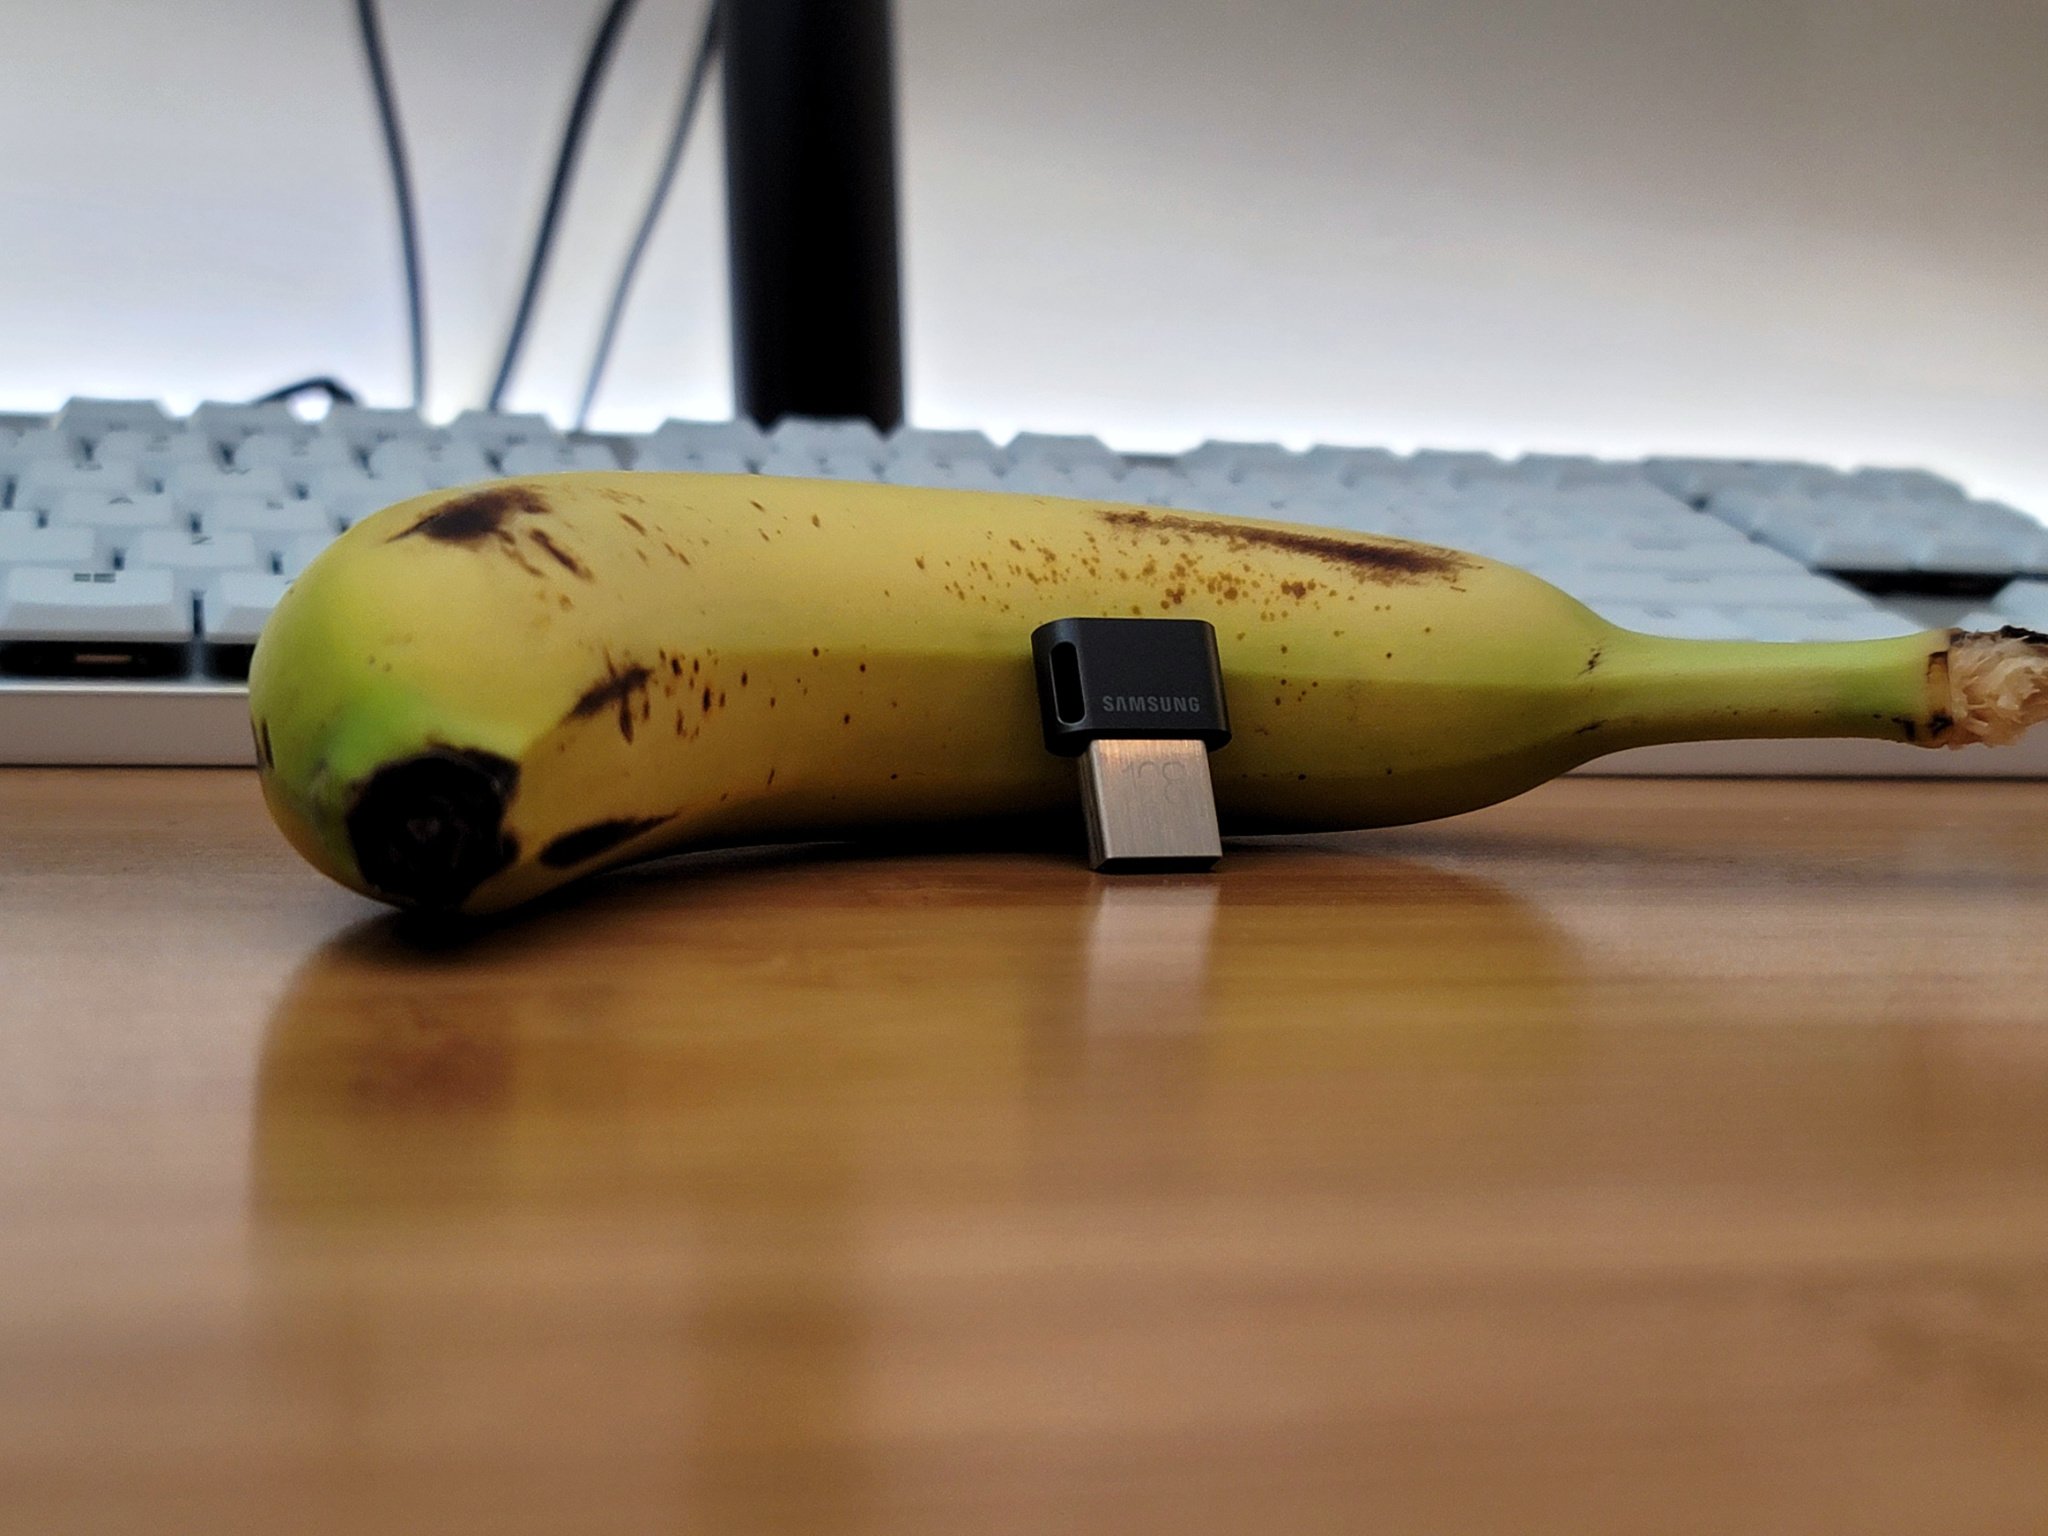 Samsung Fit Plus Usb Flash Drive Close Banana